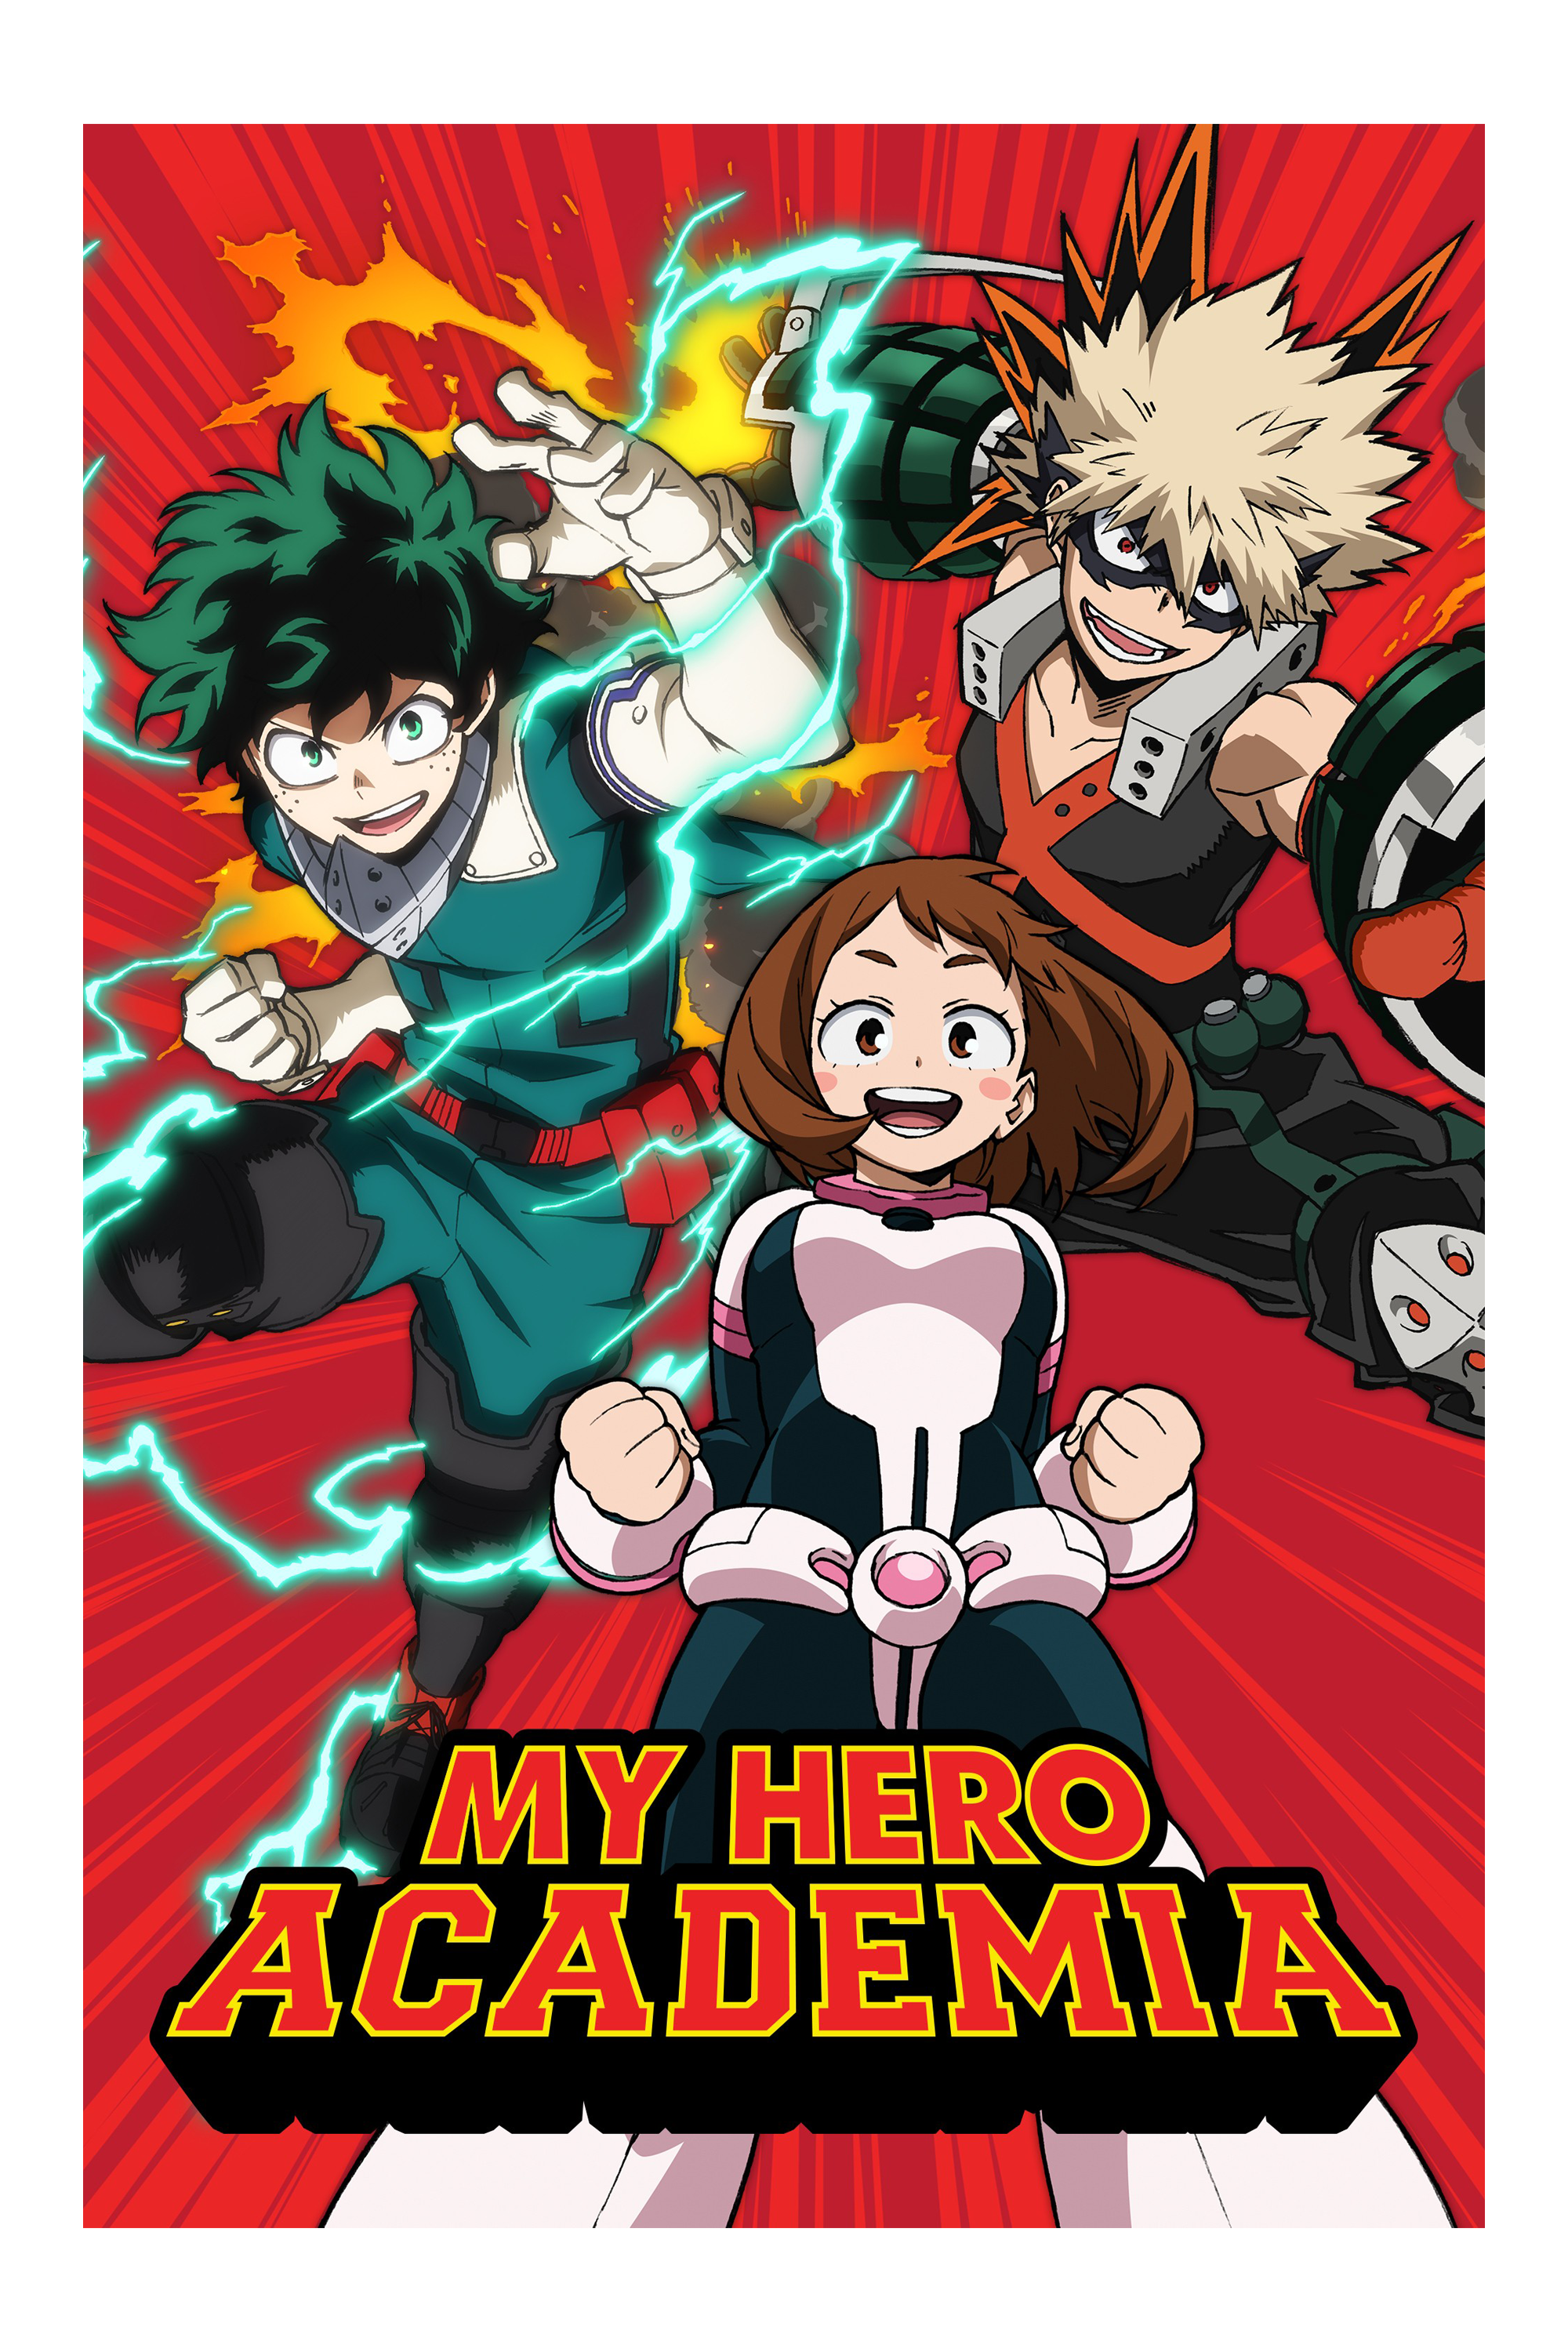 My Hero Academia Characters PNG Image Background